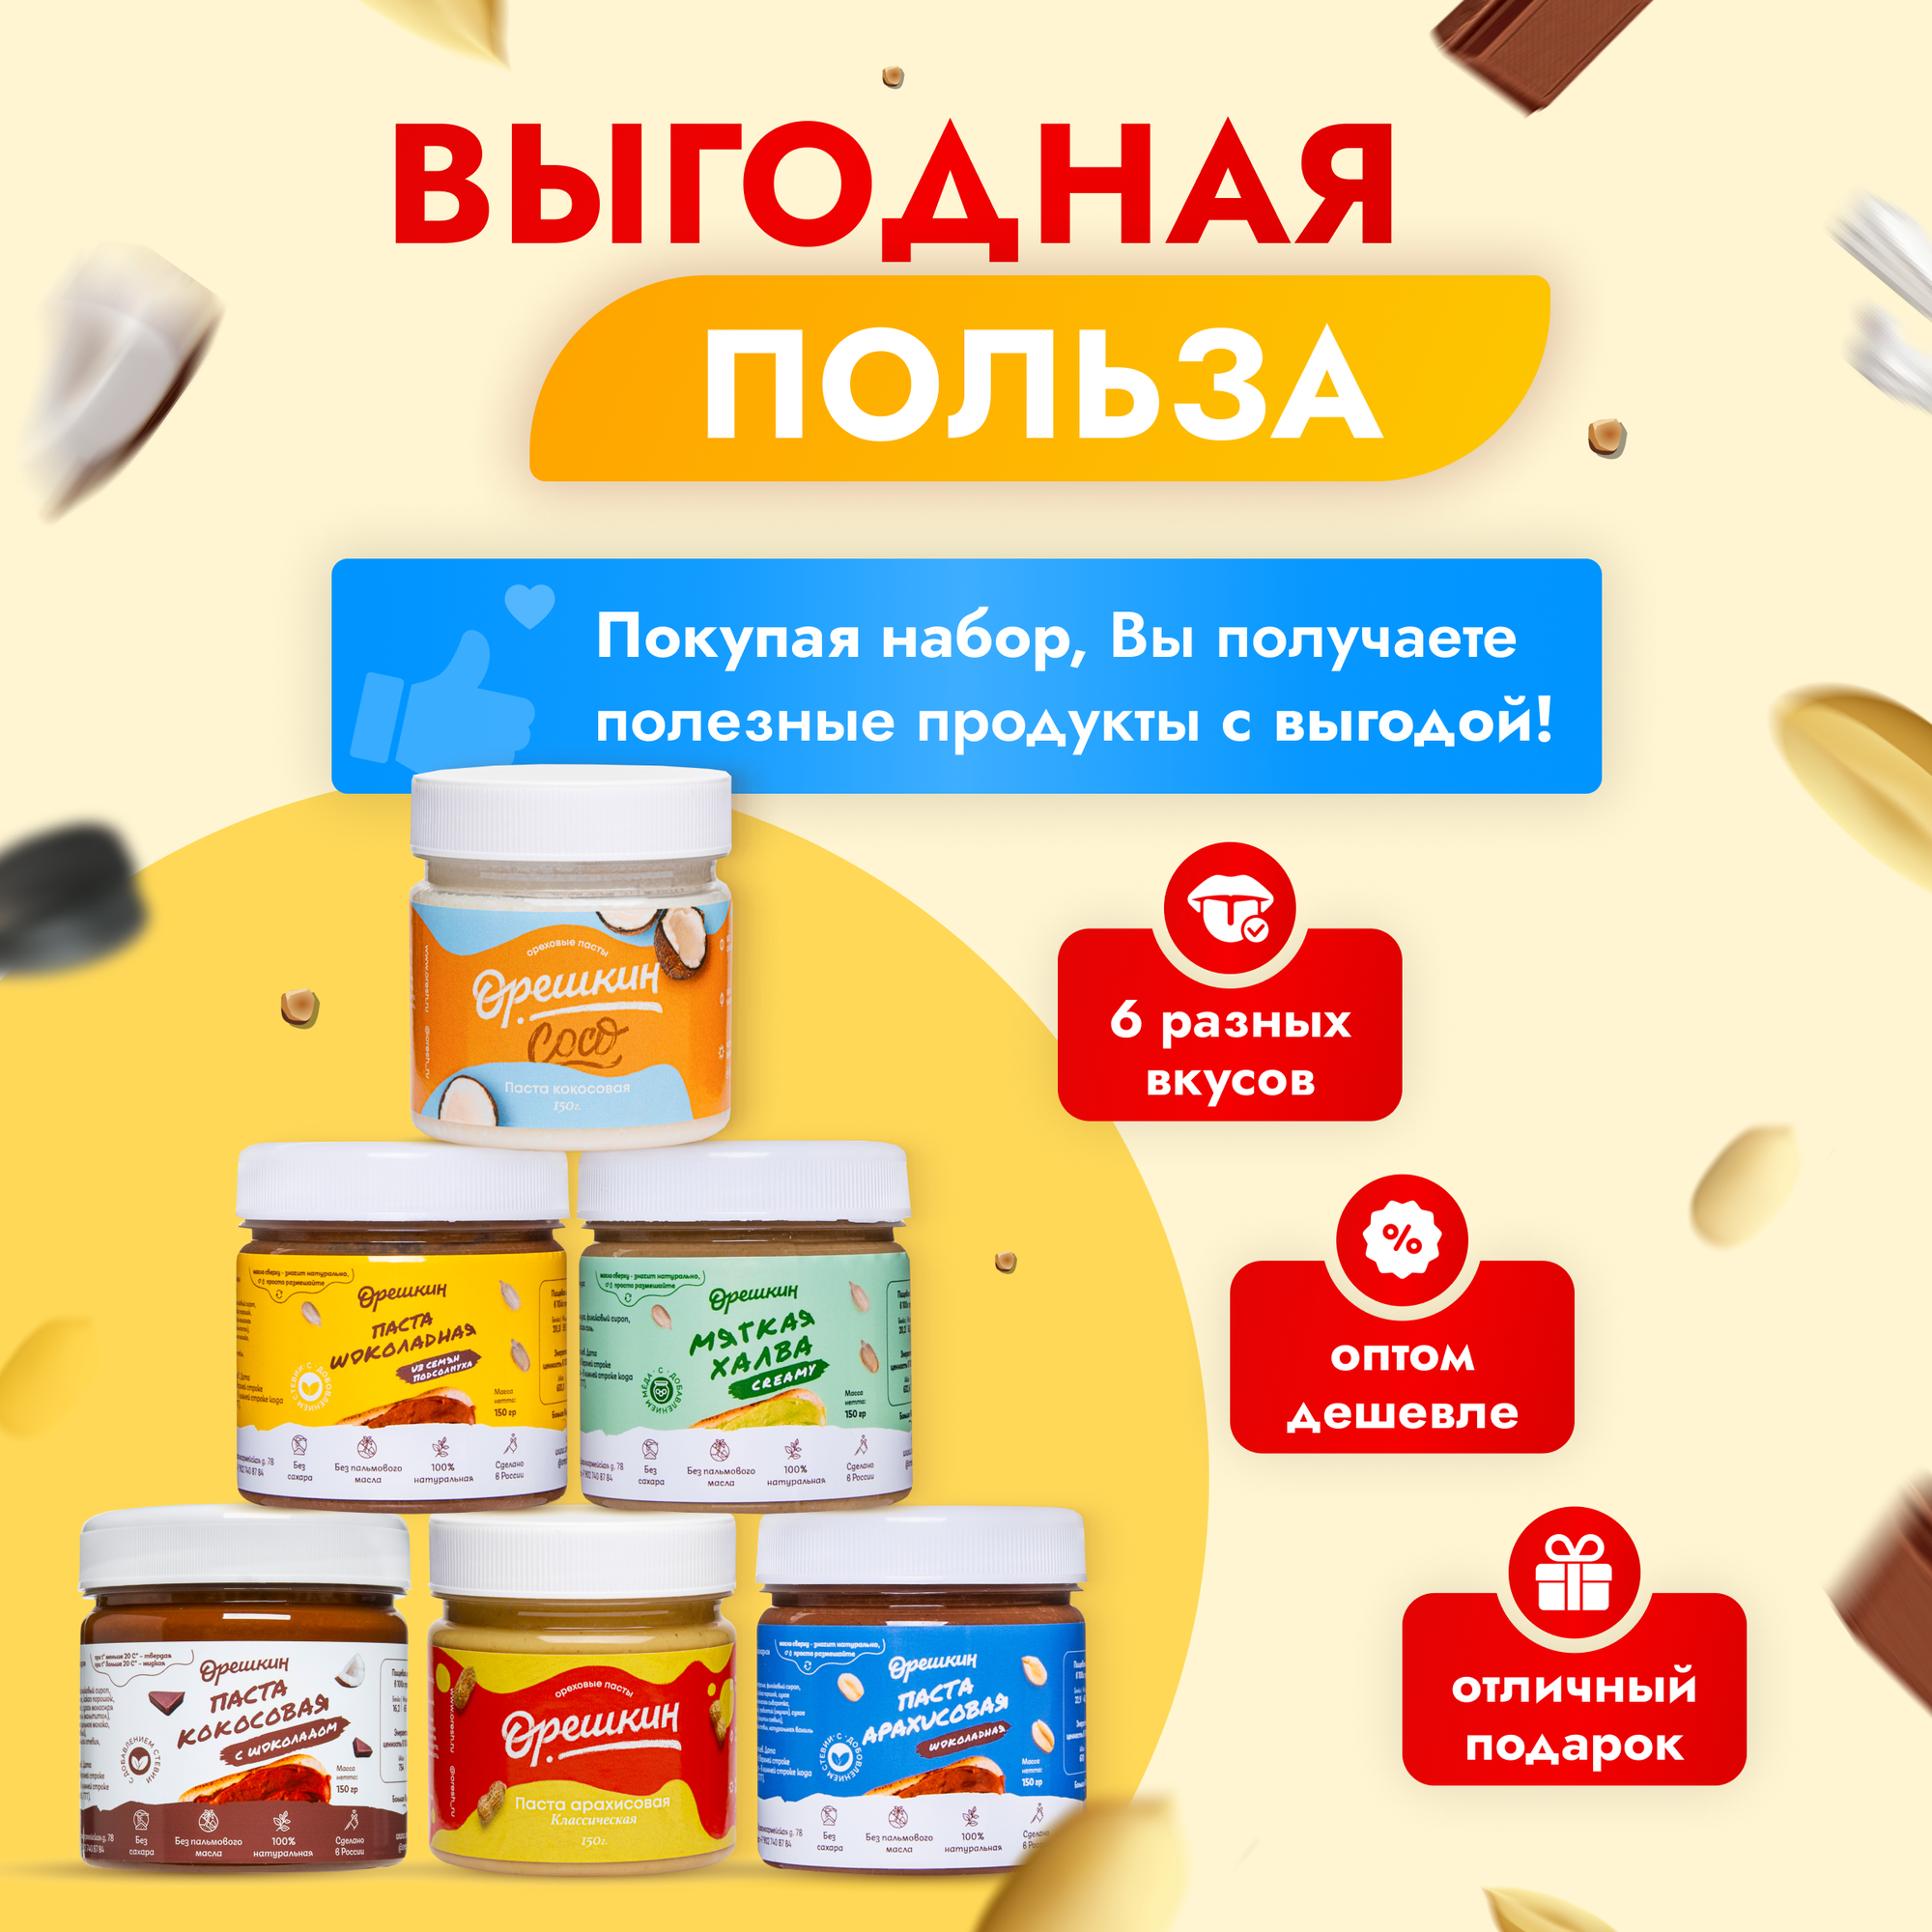 Набор ореховых паст "Орешкин" sweet&choco 6 шт/150 гр - фотография № 8